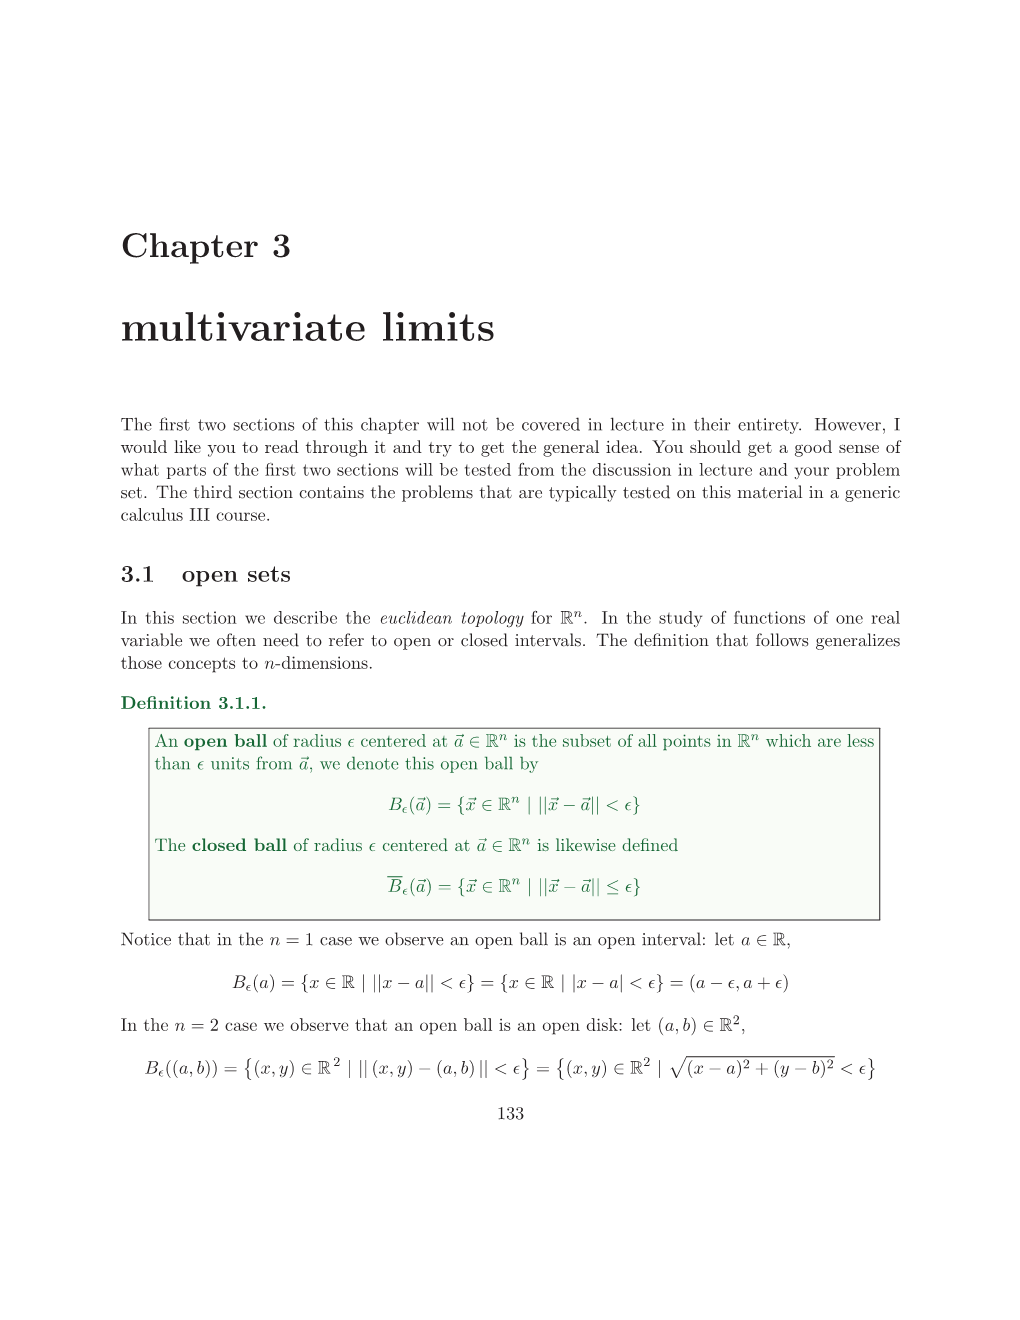 Multivariate Limits